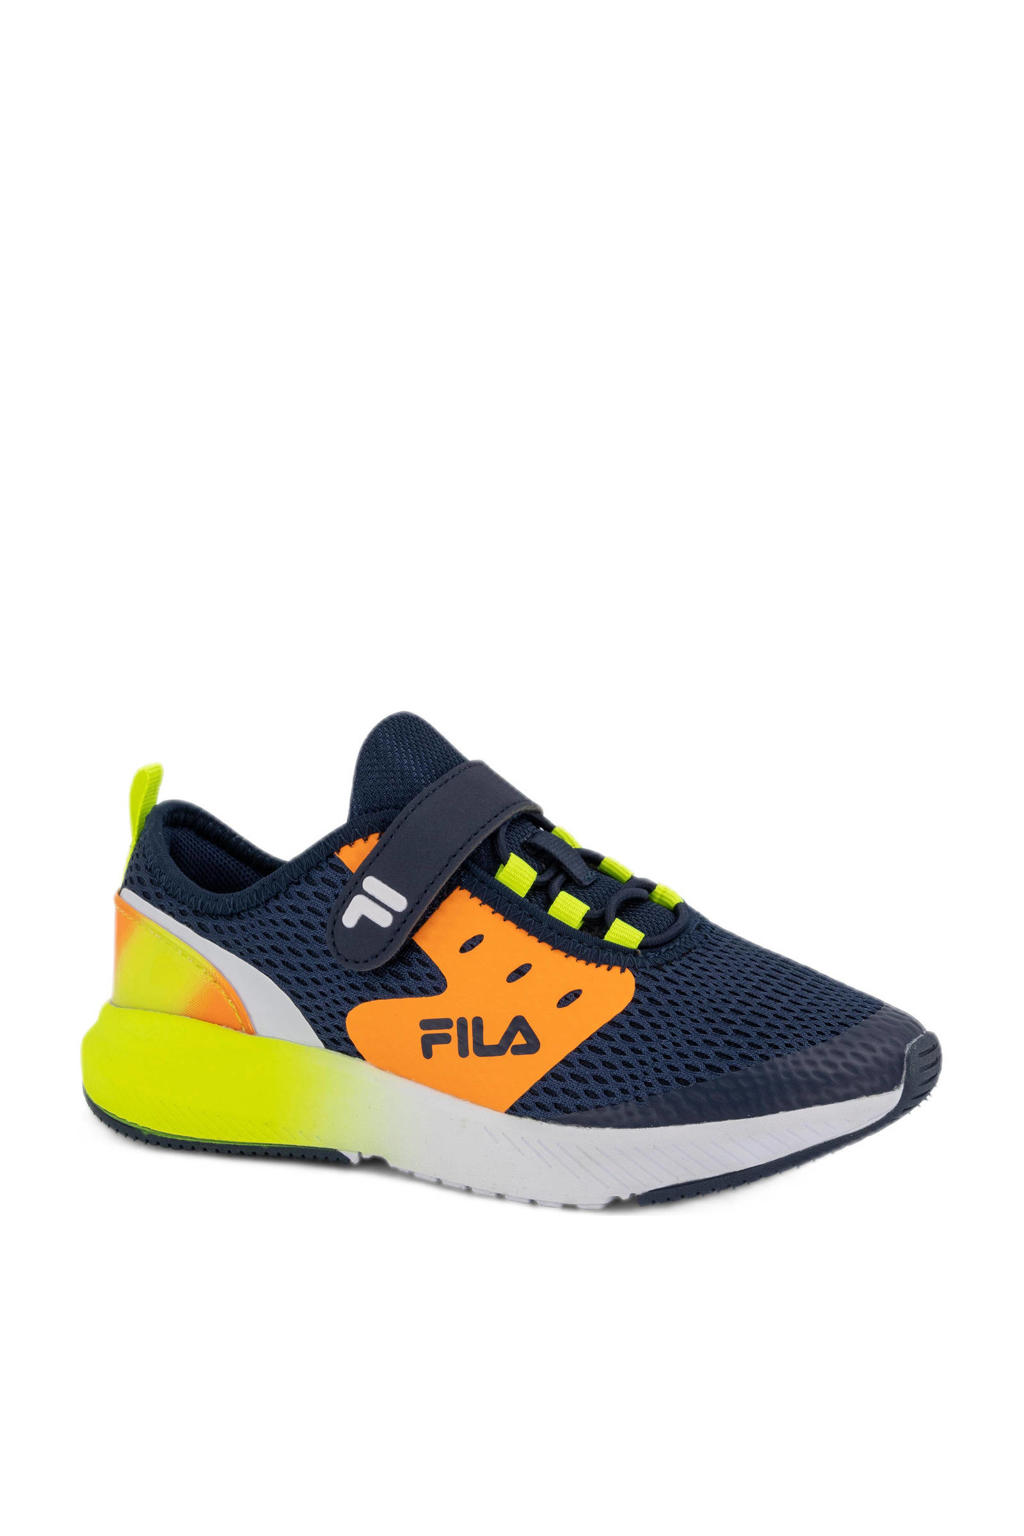 Fila   sneakers donkerblauw/oranje